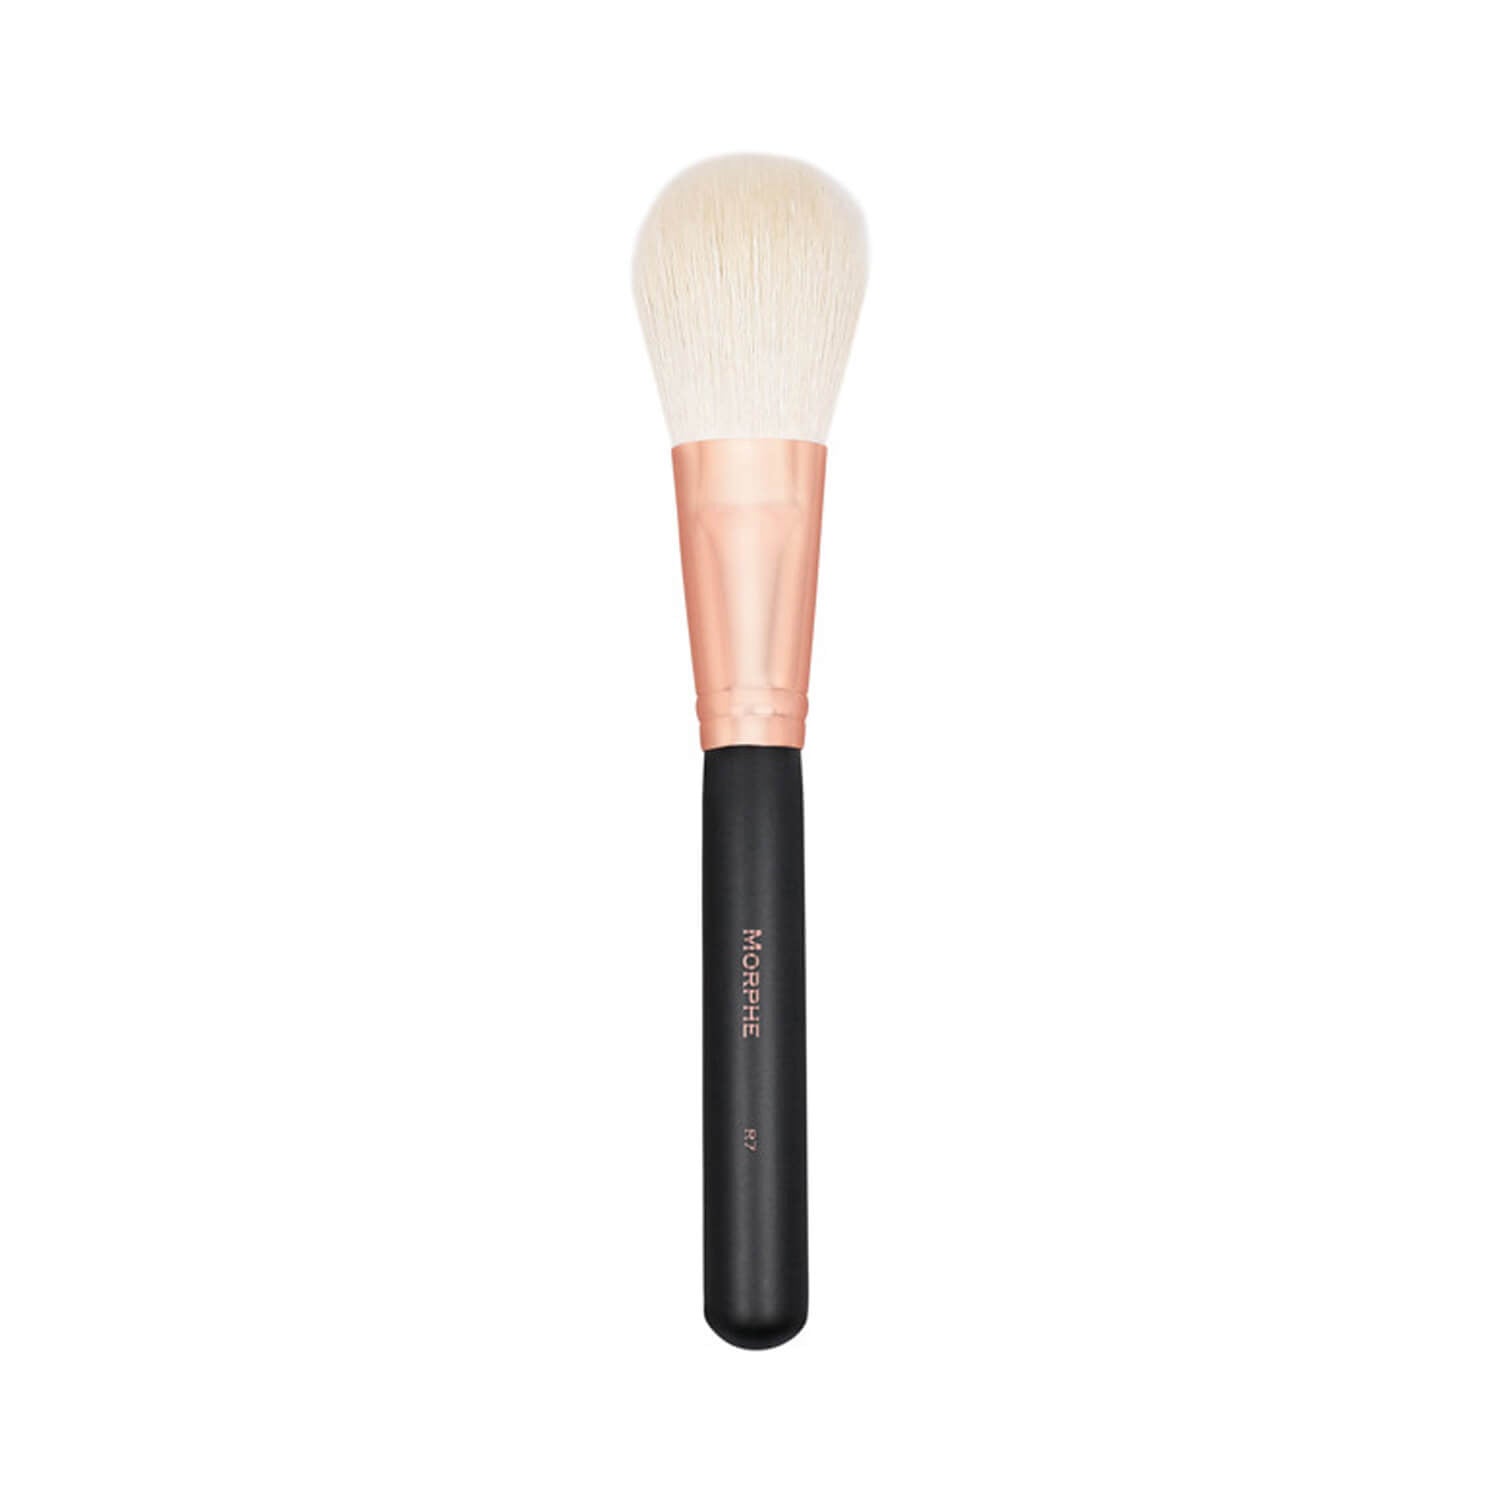 Morphe Cosmetics R7 Pro Pointed Contour Brush